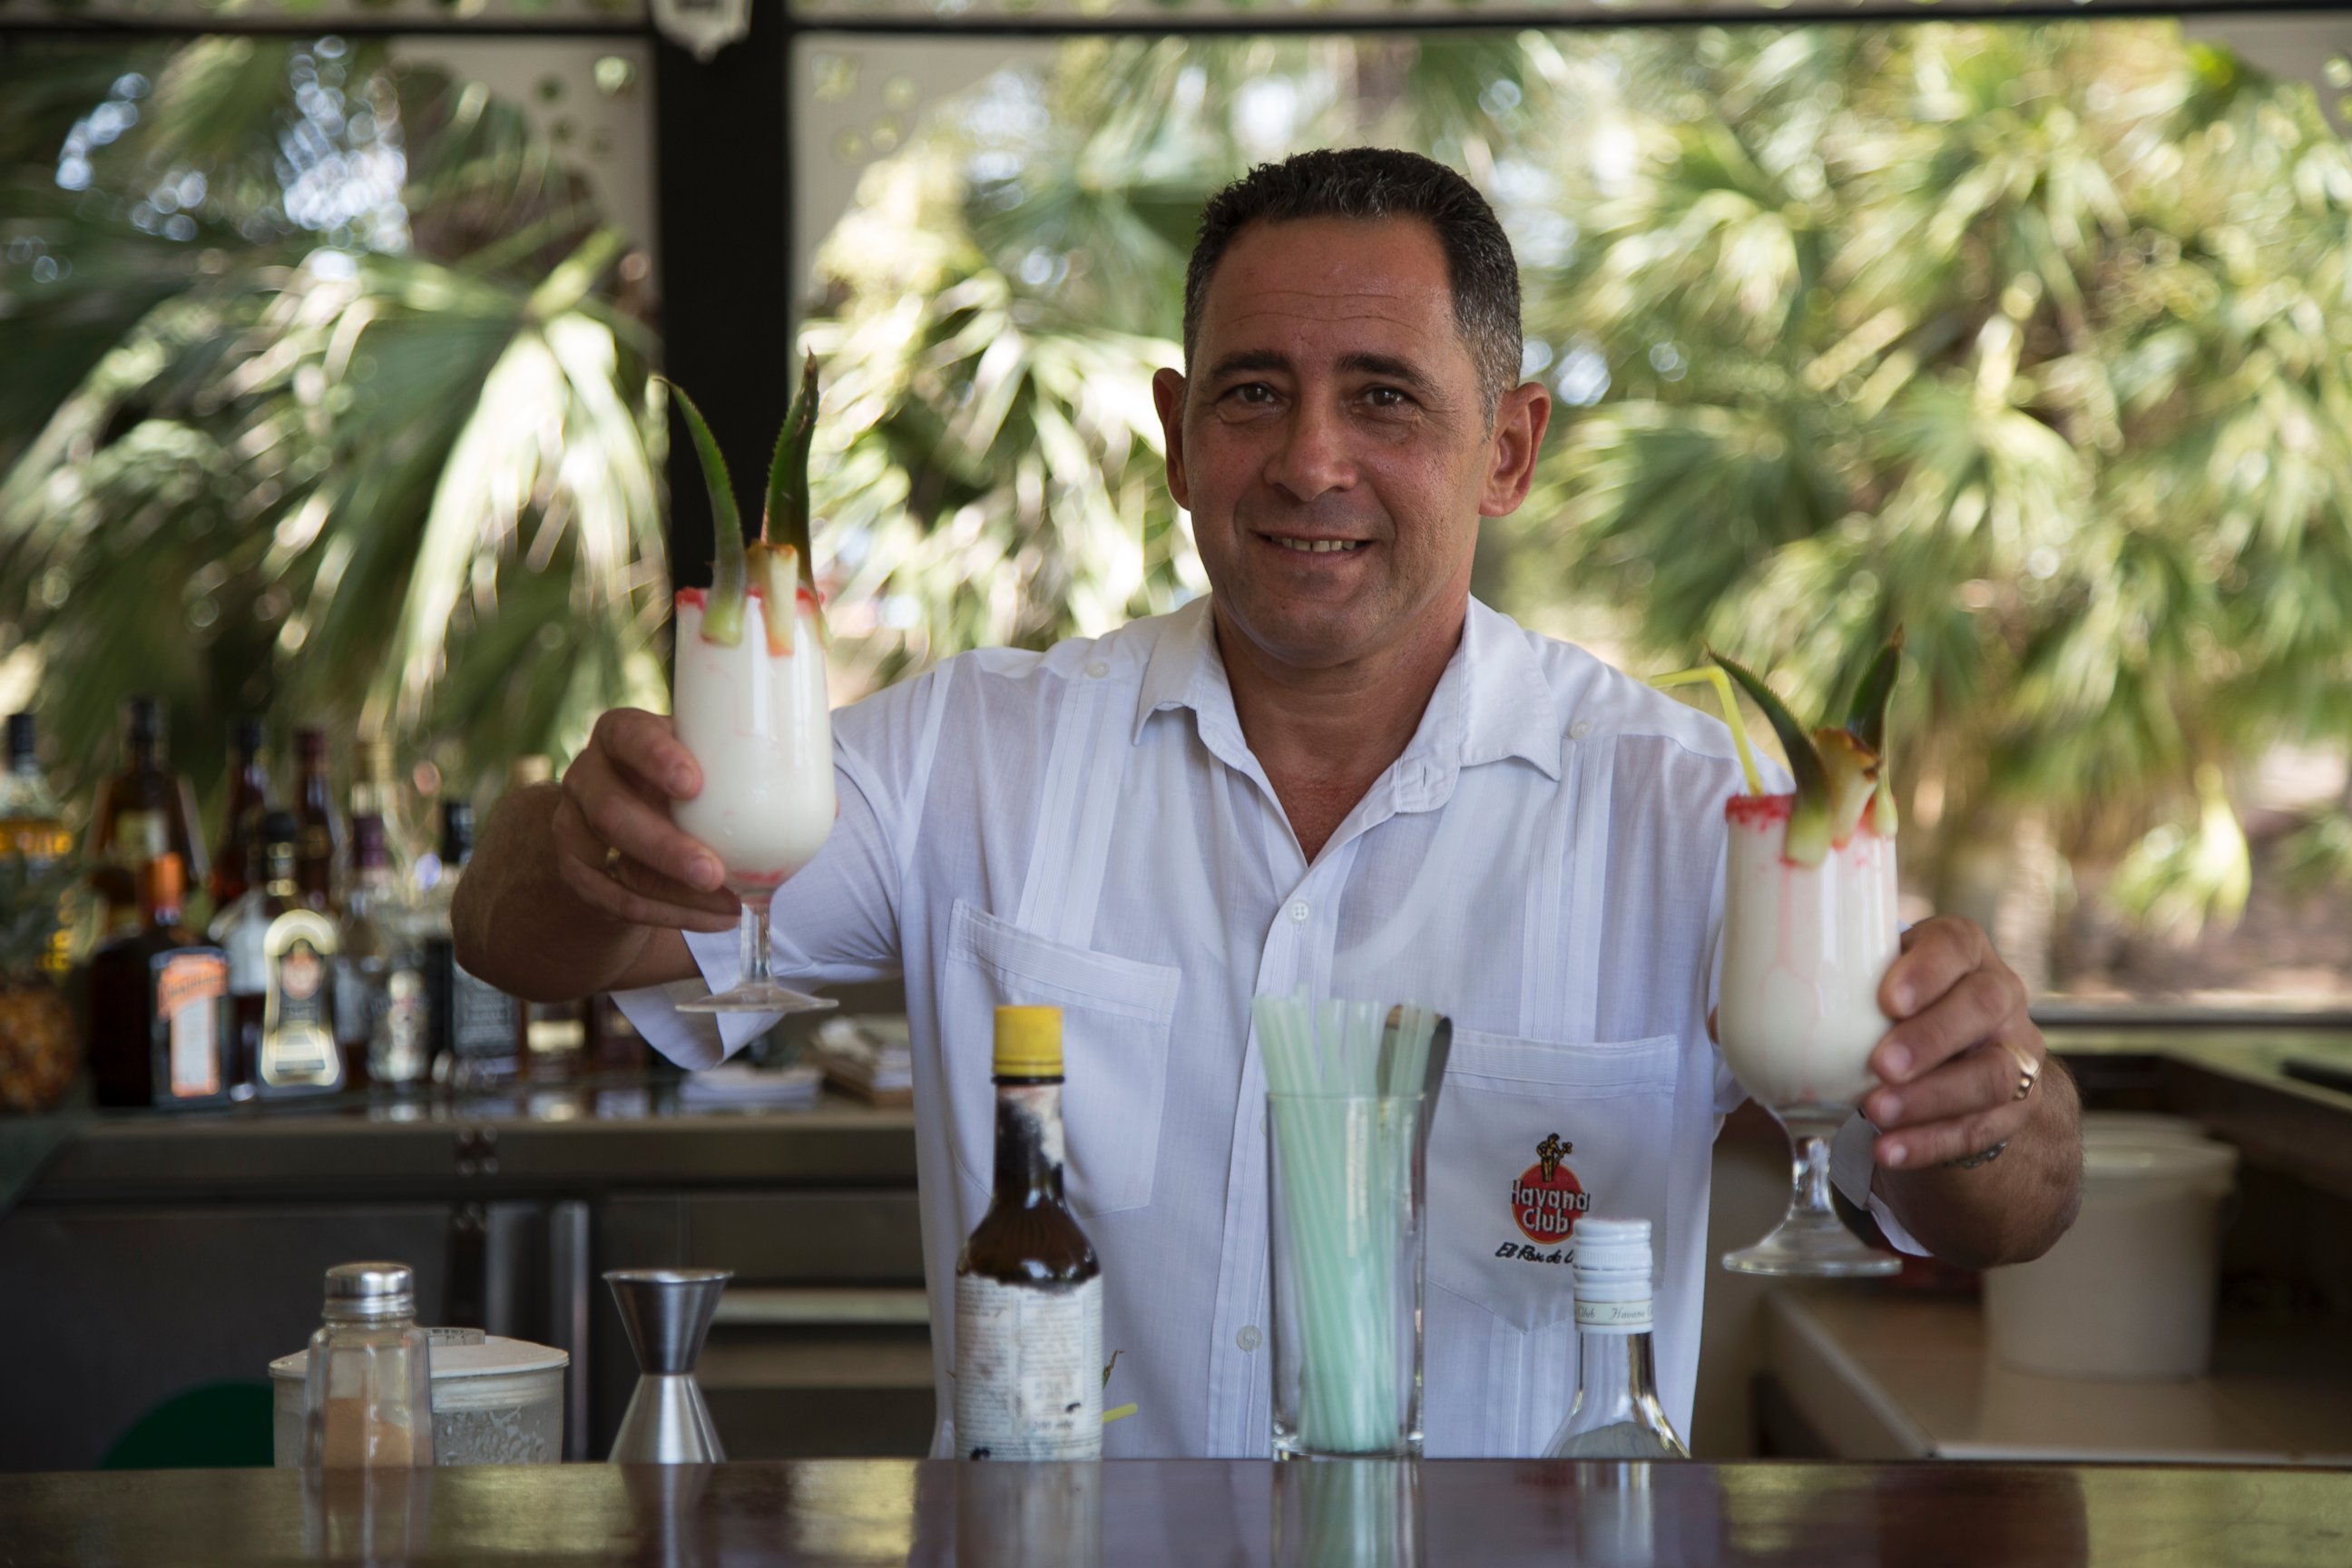 PHOTO: Juan Miguel, Elian's father, serves up Pina Coladas at his job as a bartender - the same job he had before the US/Cuba custody battle.